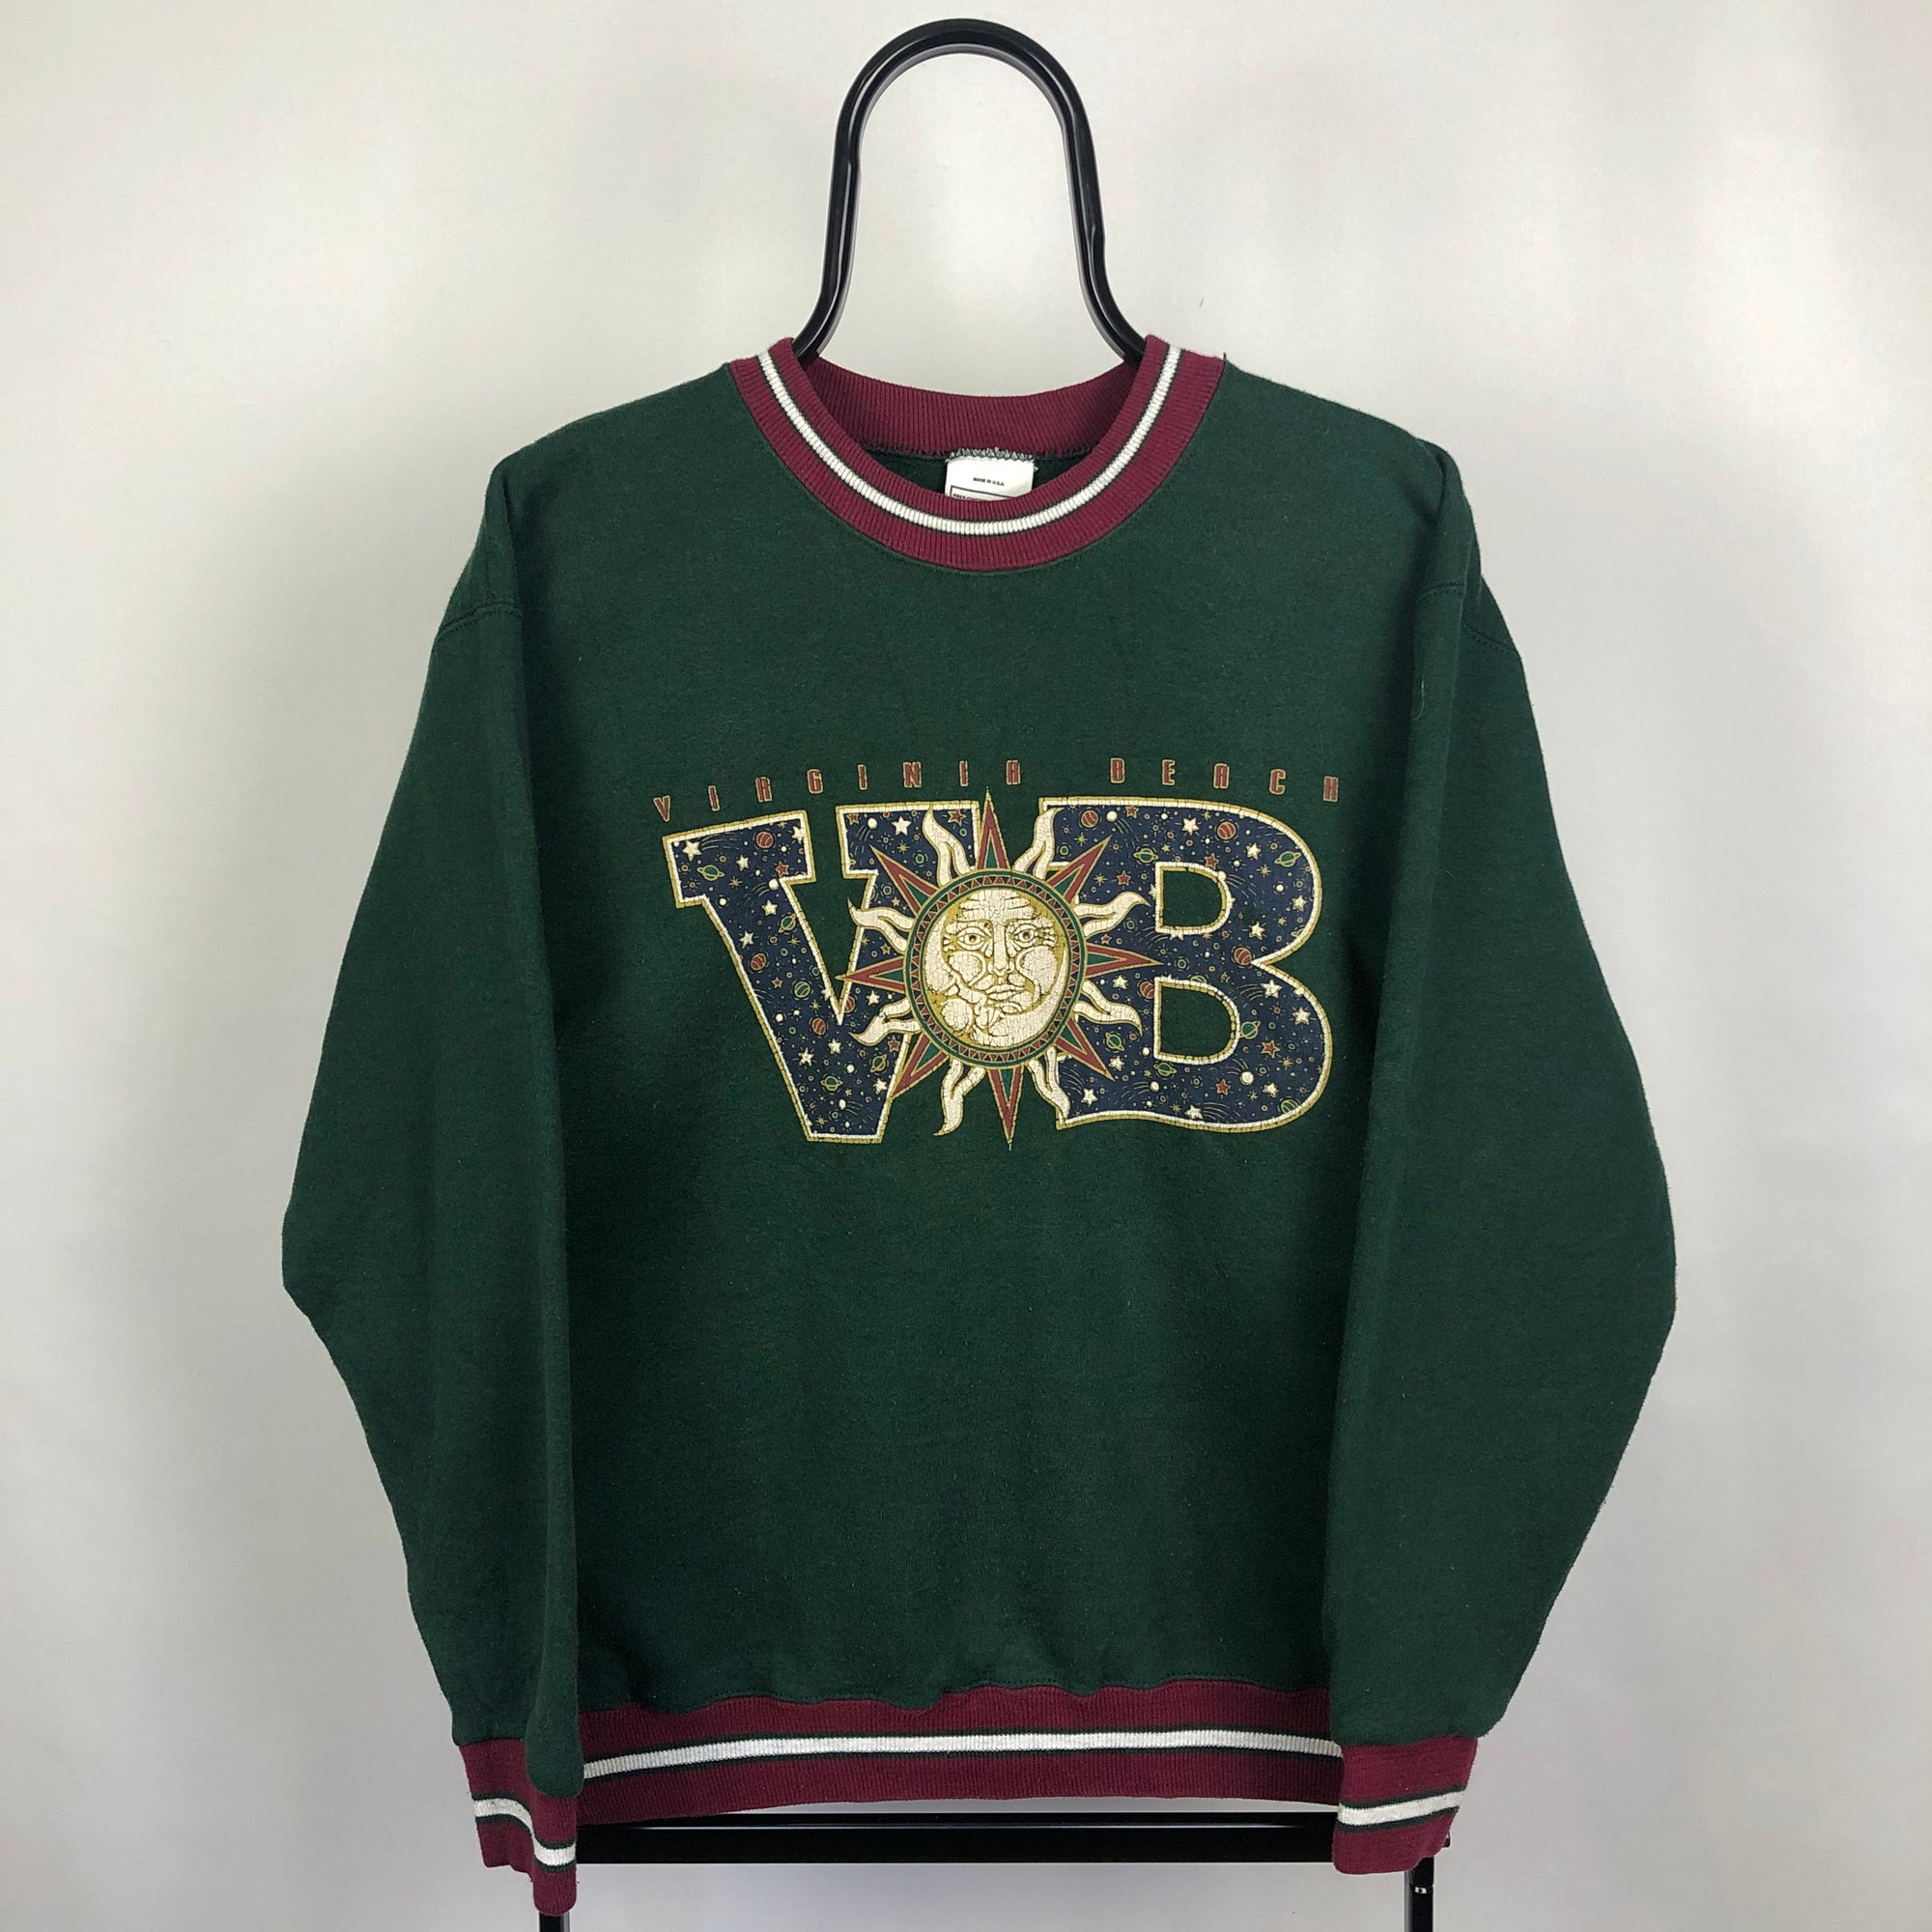 Vintage 'Virginia Beach' Sweatshirt - Men's Small/Women's Medium